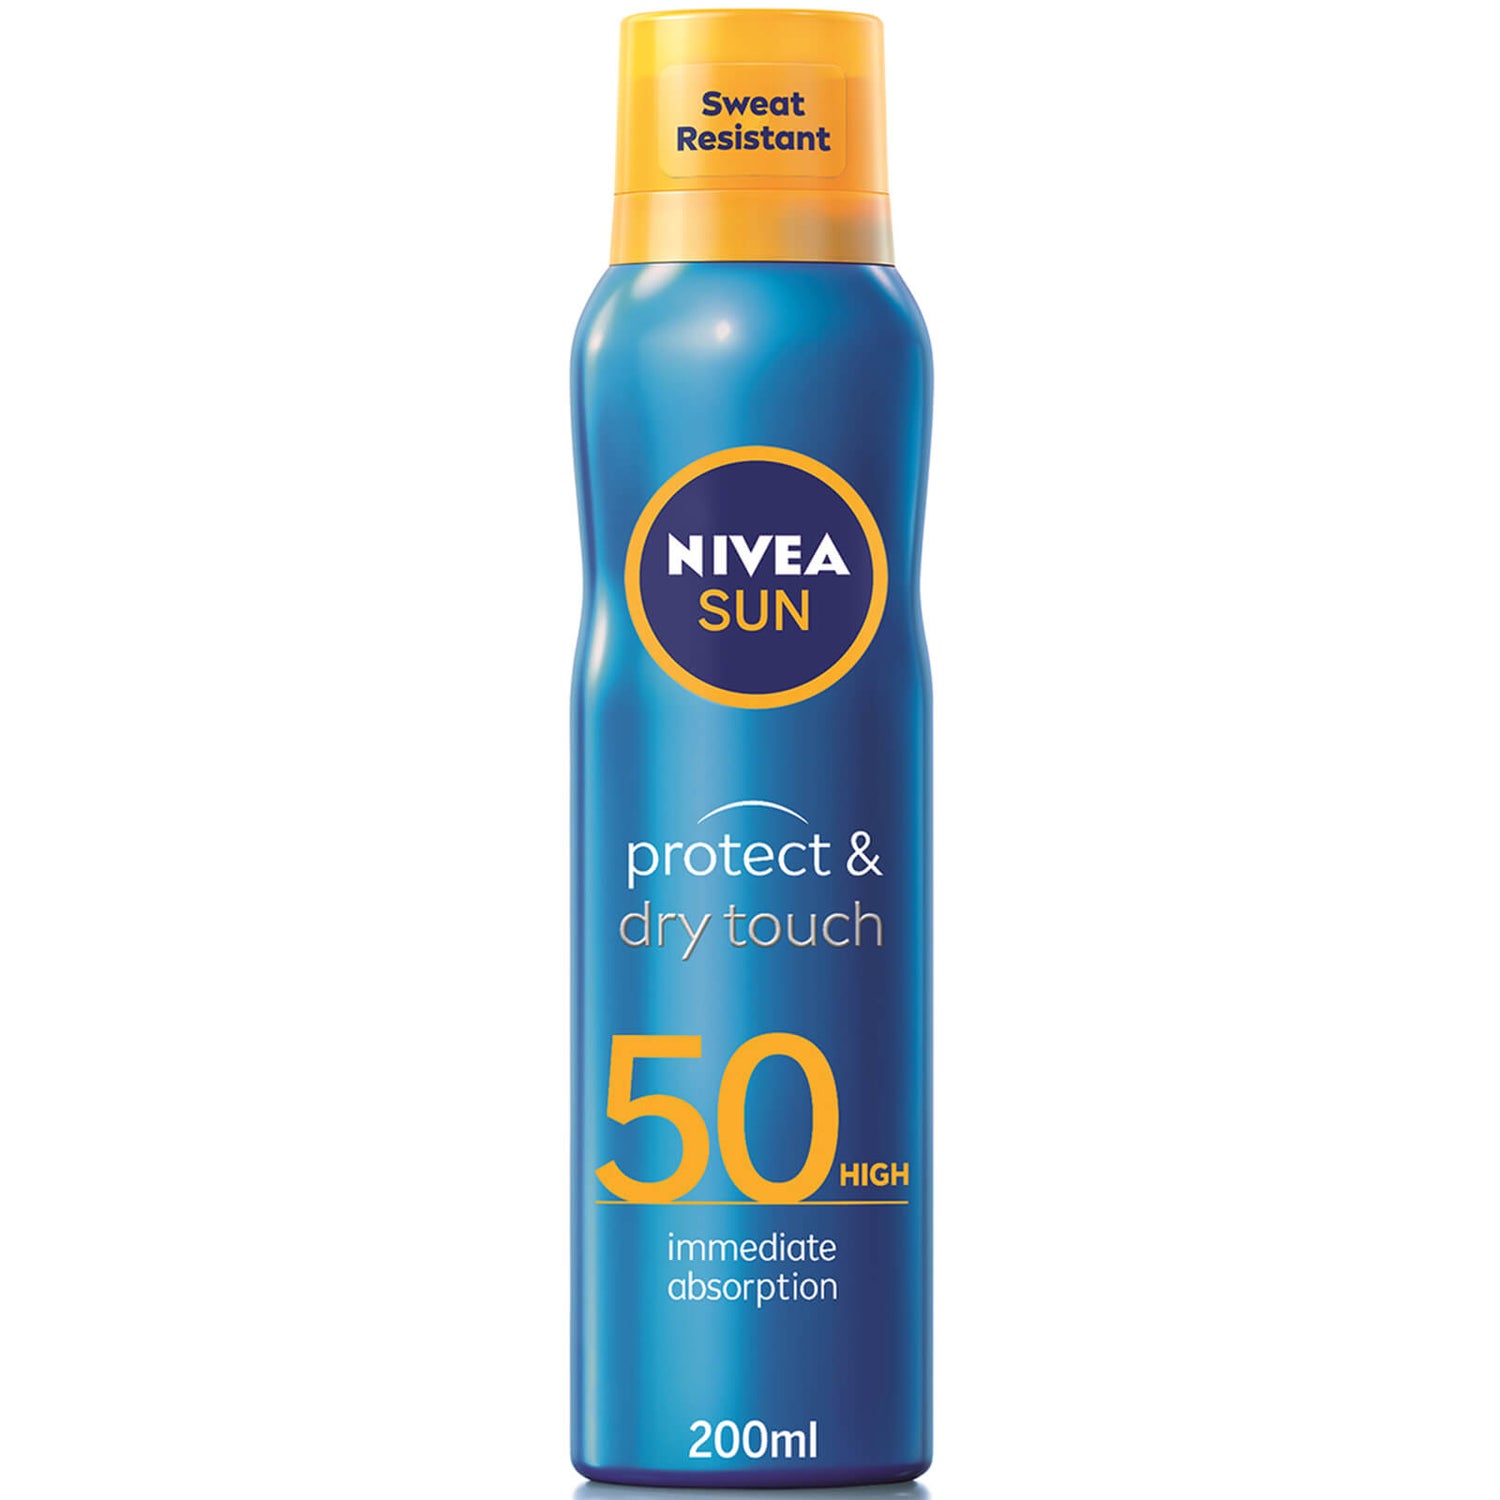 NIVEA SUN Protect & Dry Touch Cooling Sun Cream Mist SPF50 200ml